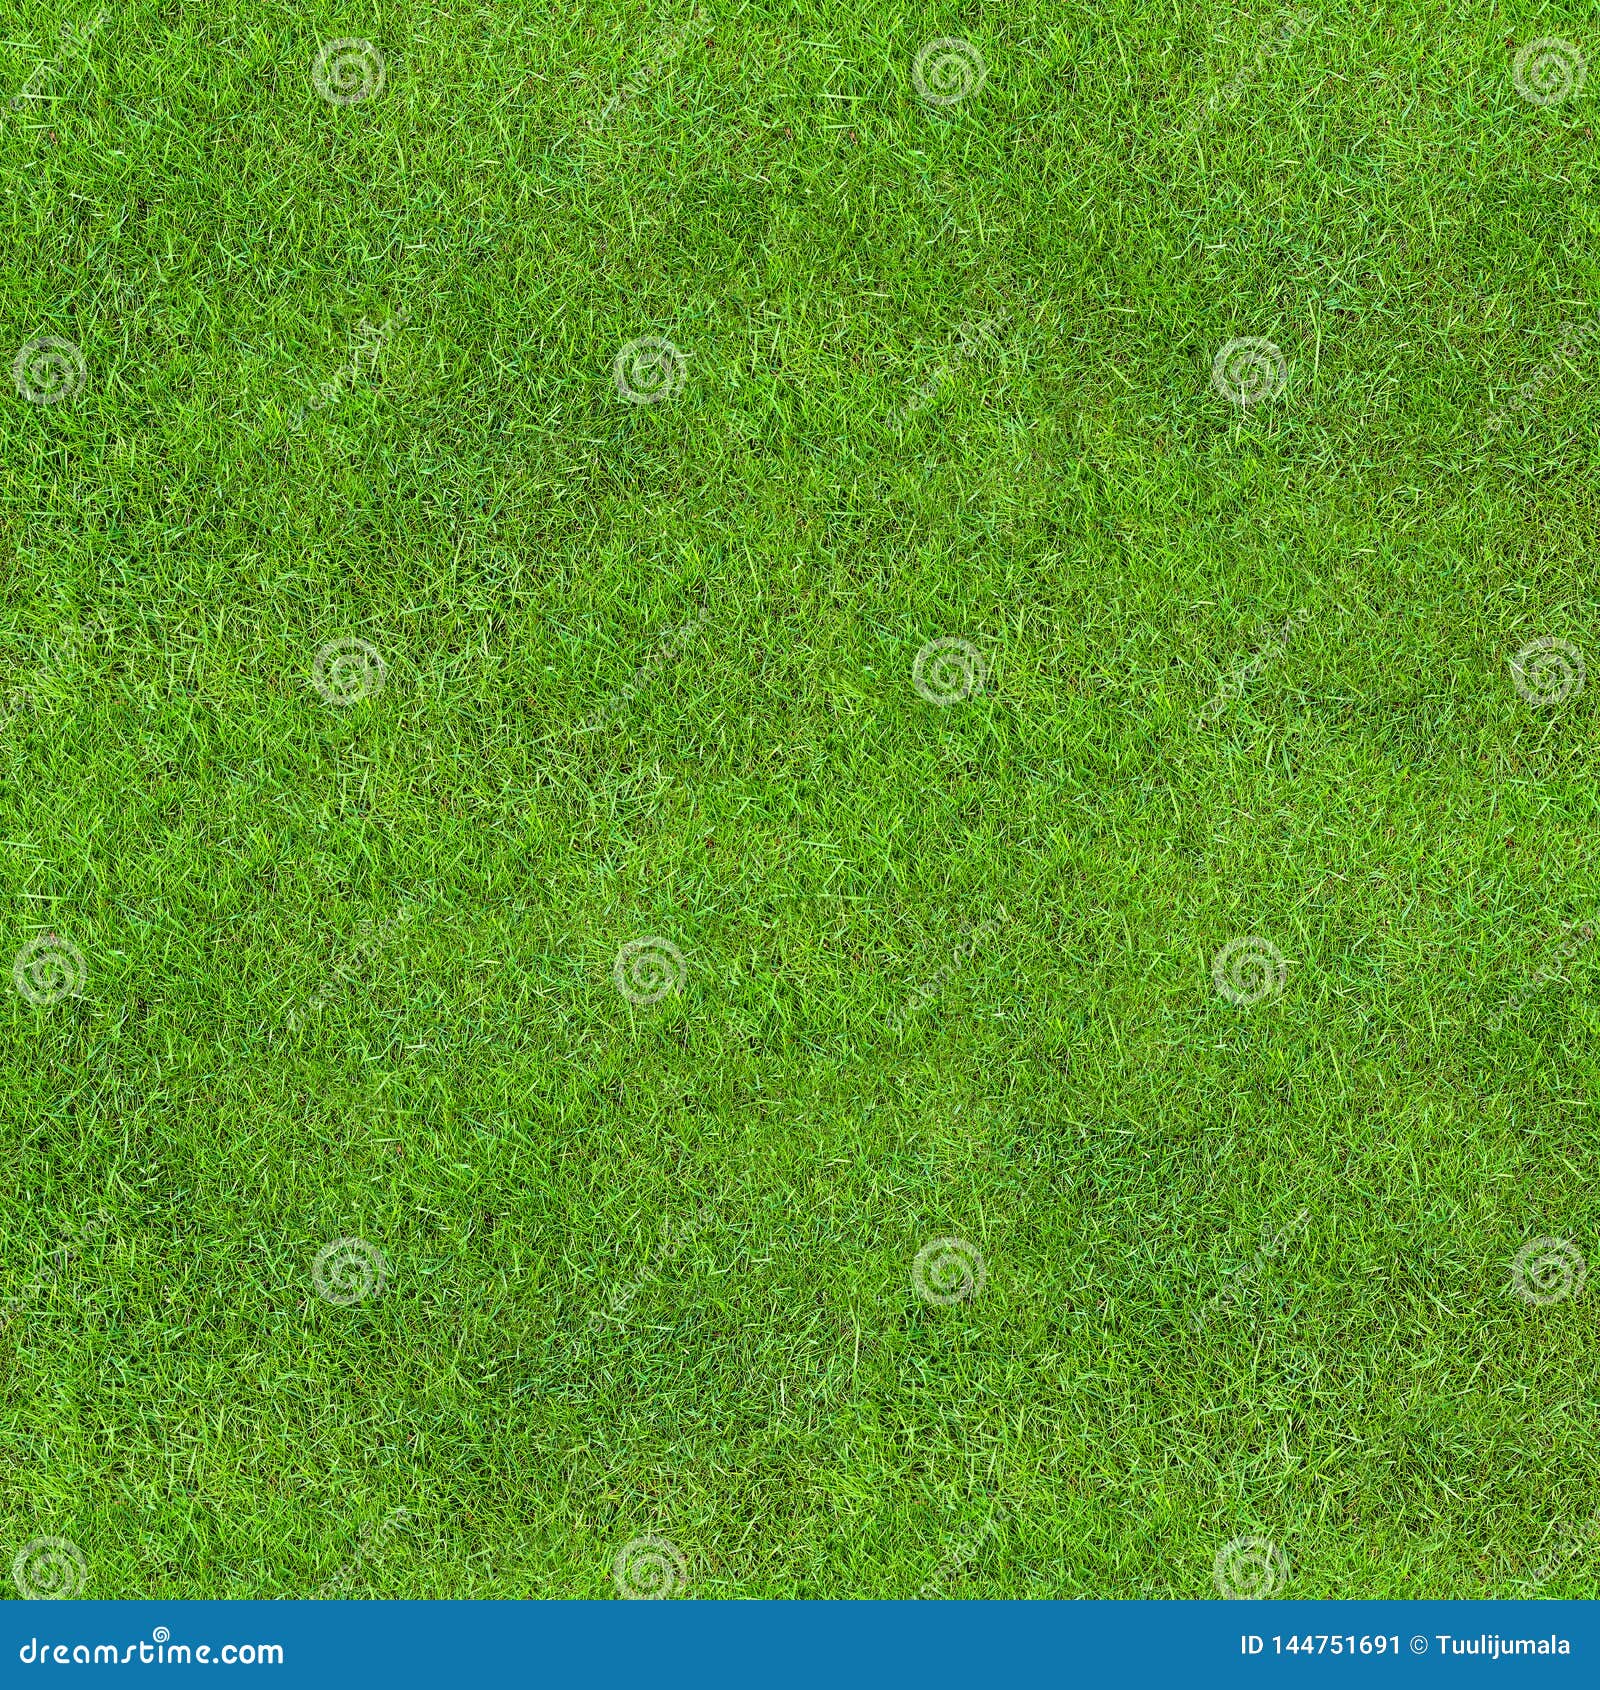 Seamless Green Lush Grass Texture Stock Image Image Of Football Lush 